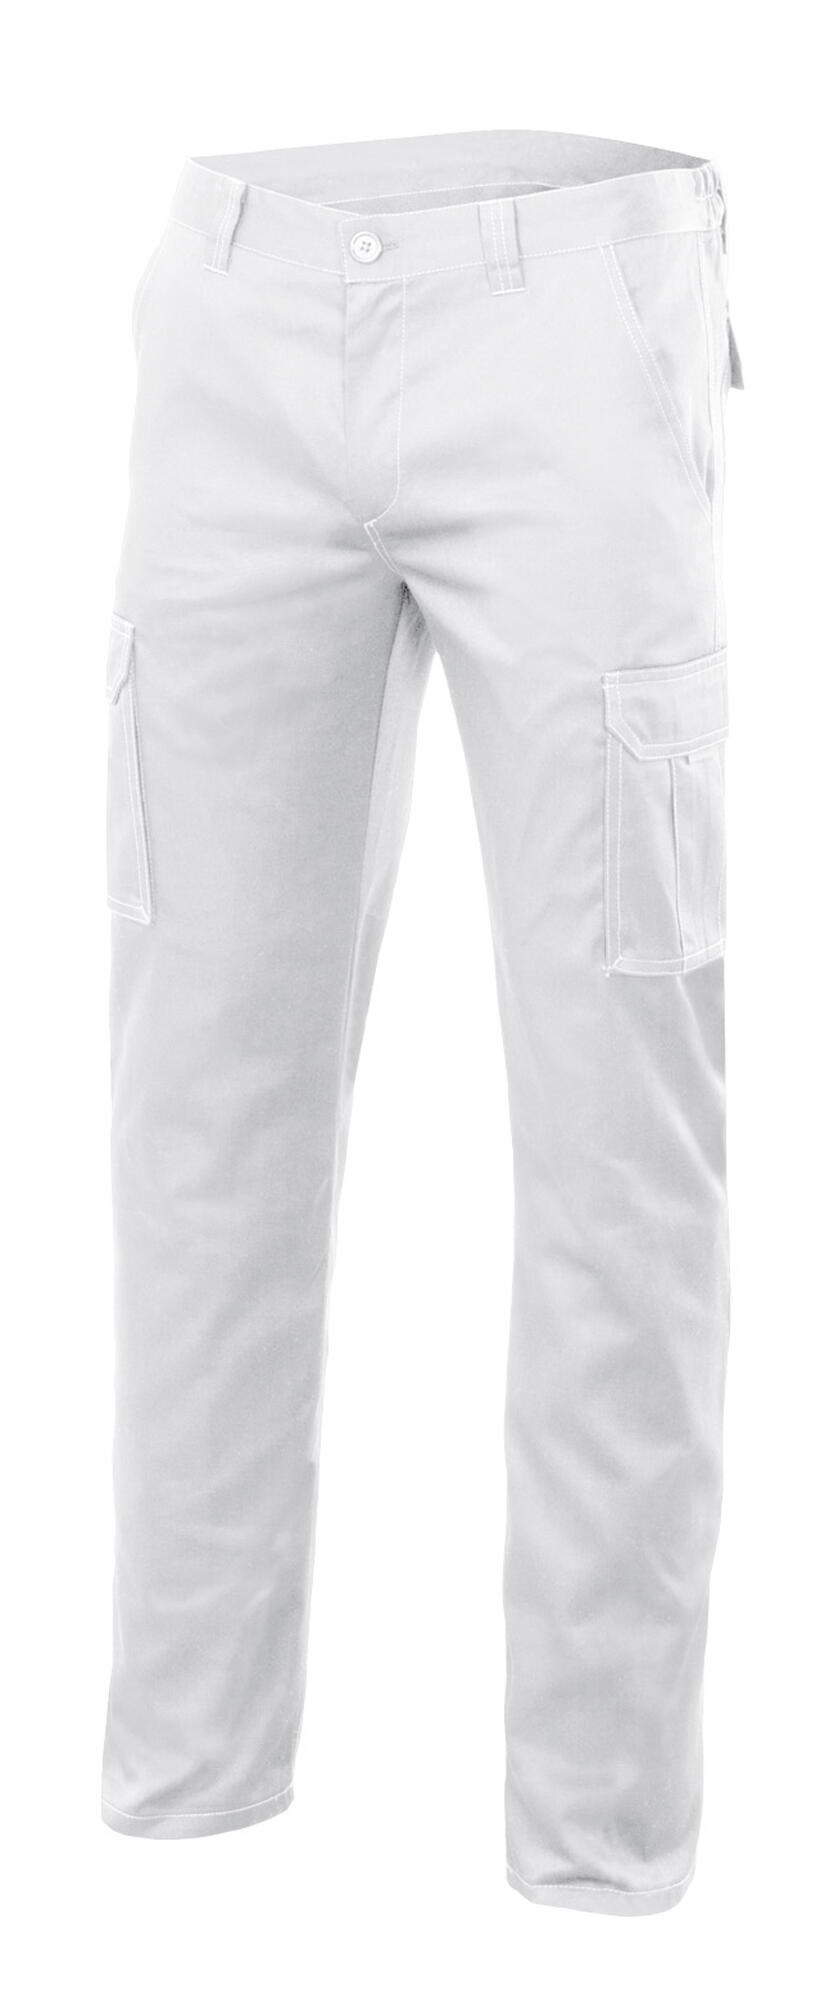 Pantalon de trabajo multibolsillo stretch blanco t36